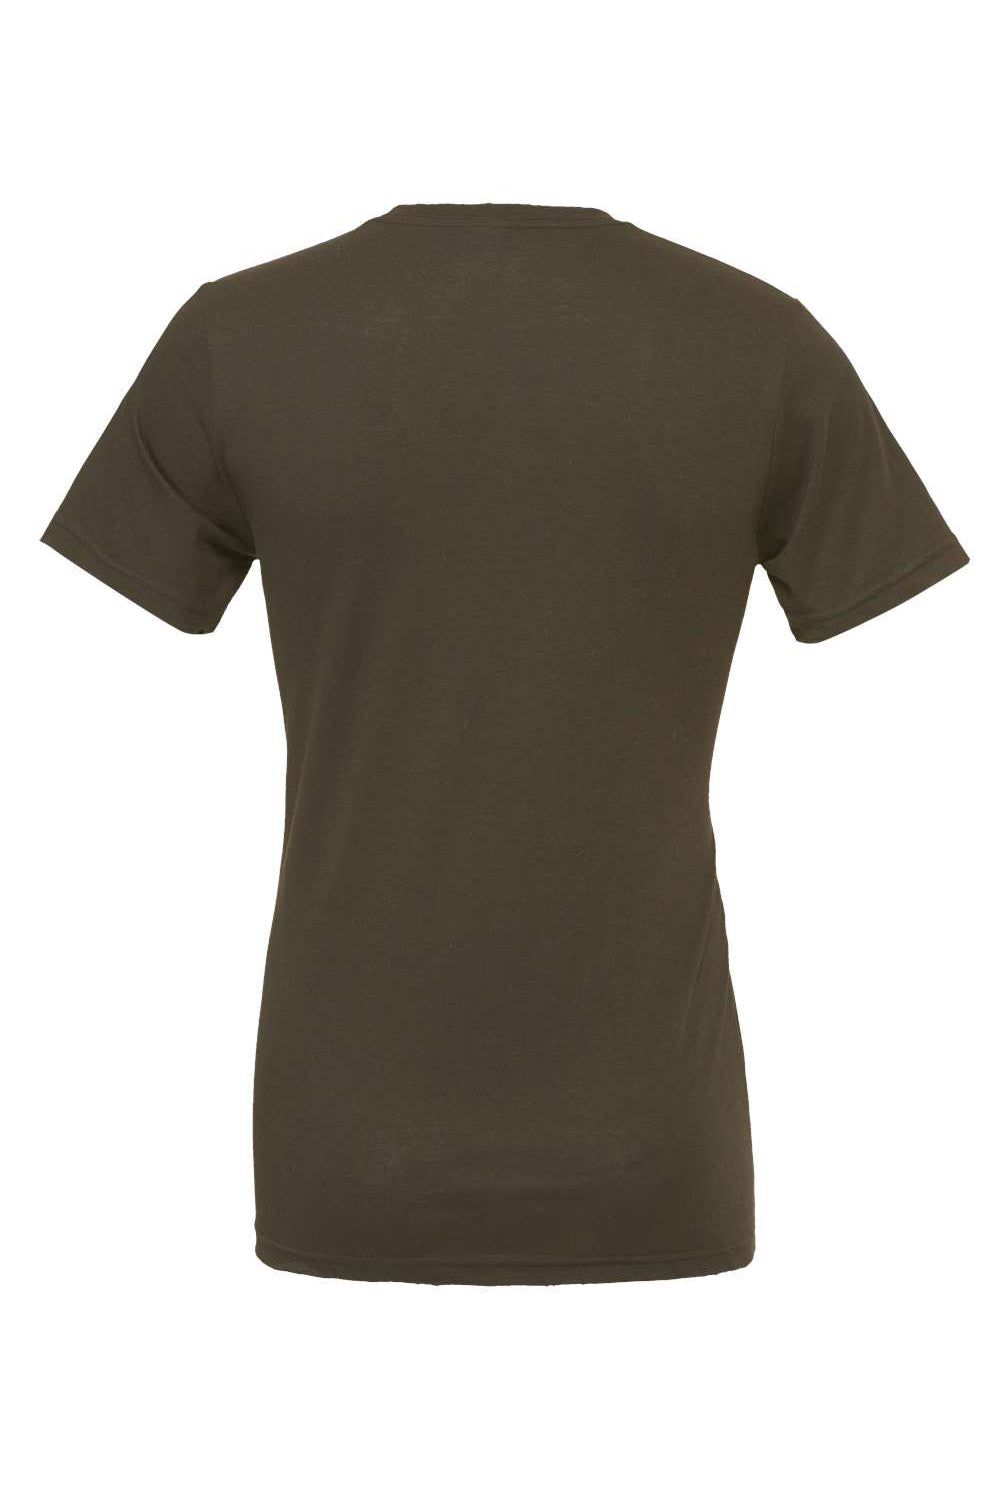 Bella + Canvas BC3001/3001C Mens Jersey Short Sleeve Crewneck T-Shirt Army Green Flat Back